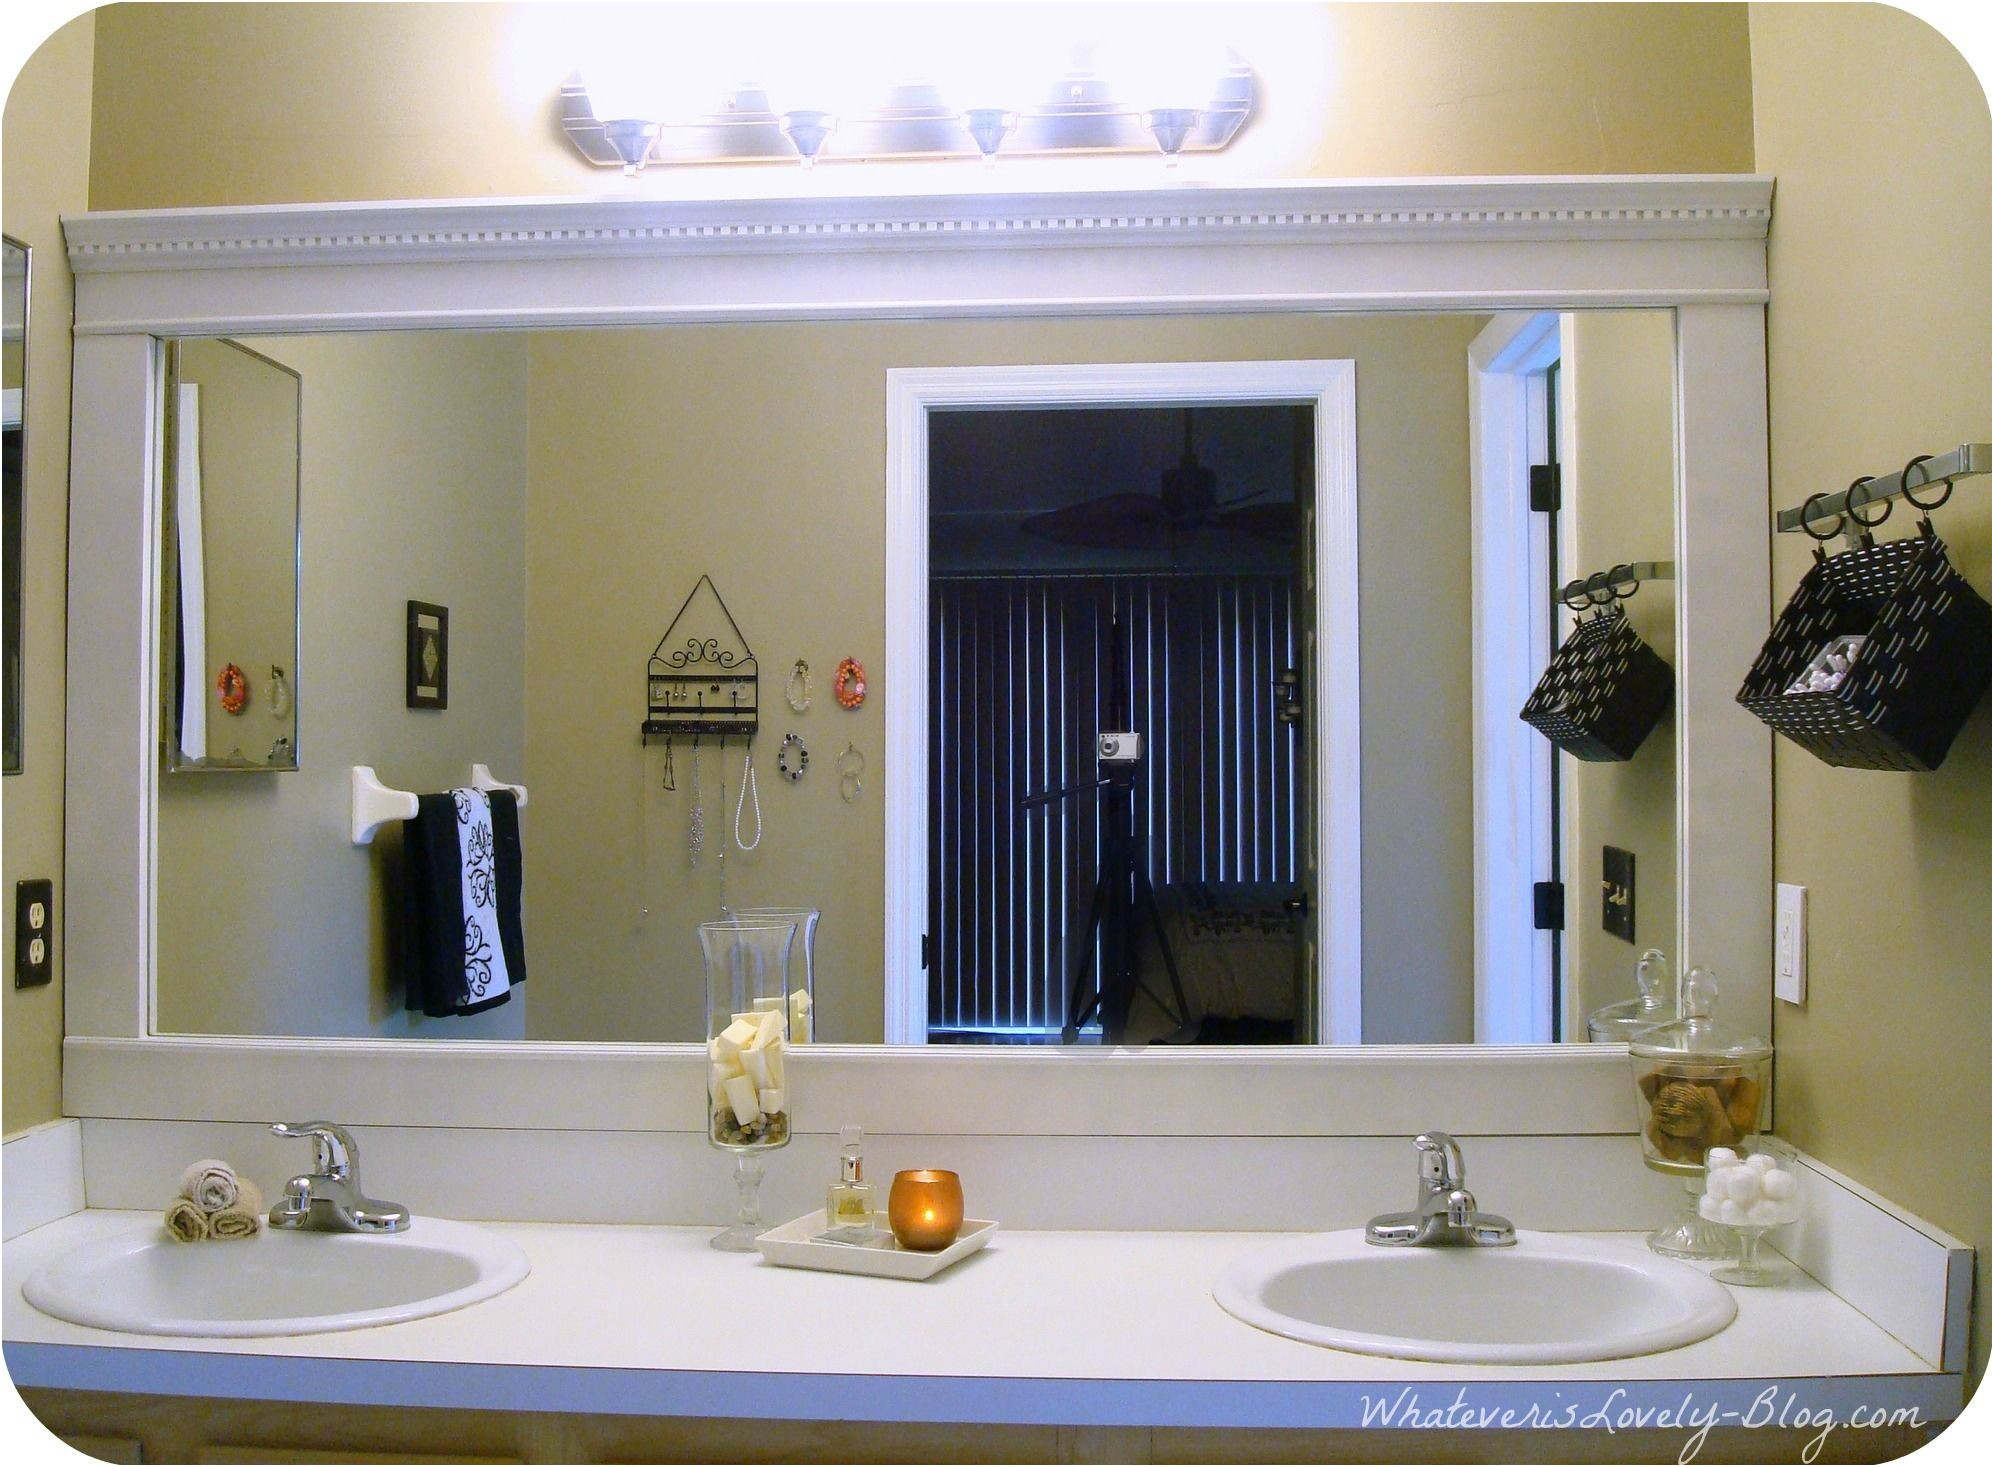 Inspirational Easy Way to Frame Bathroom Mirror